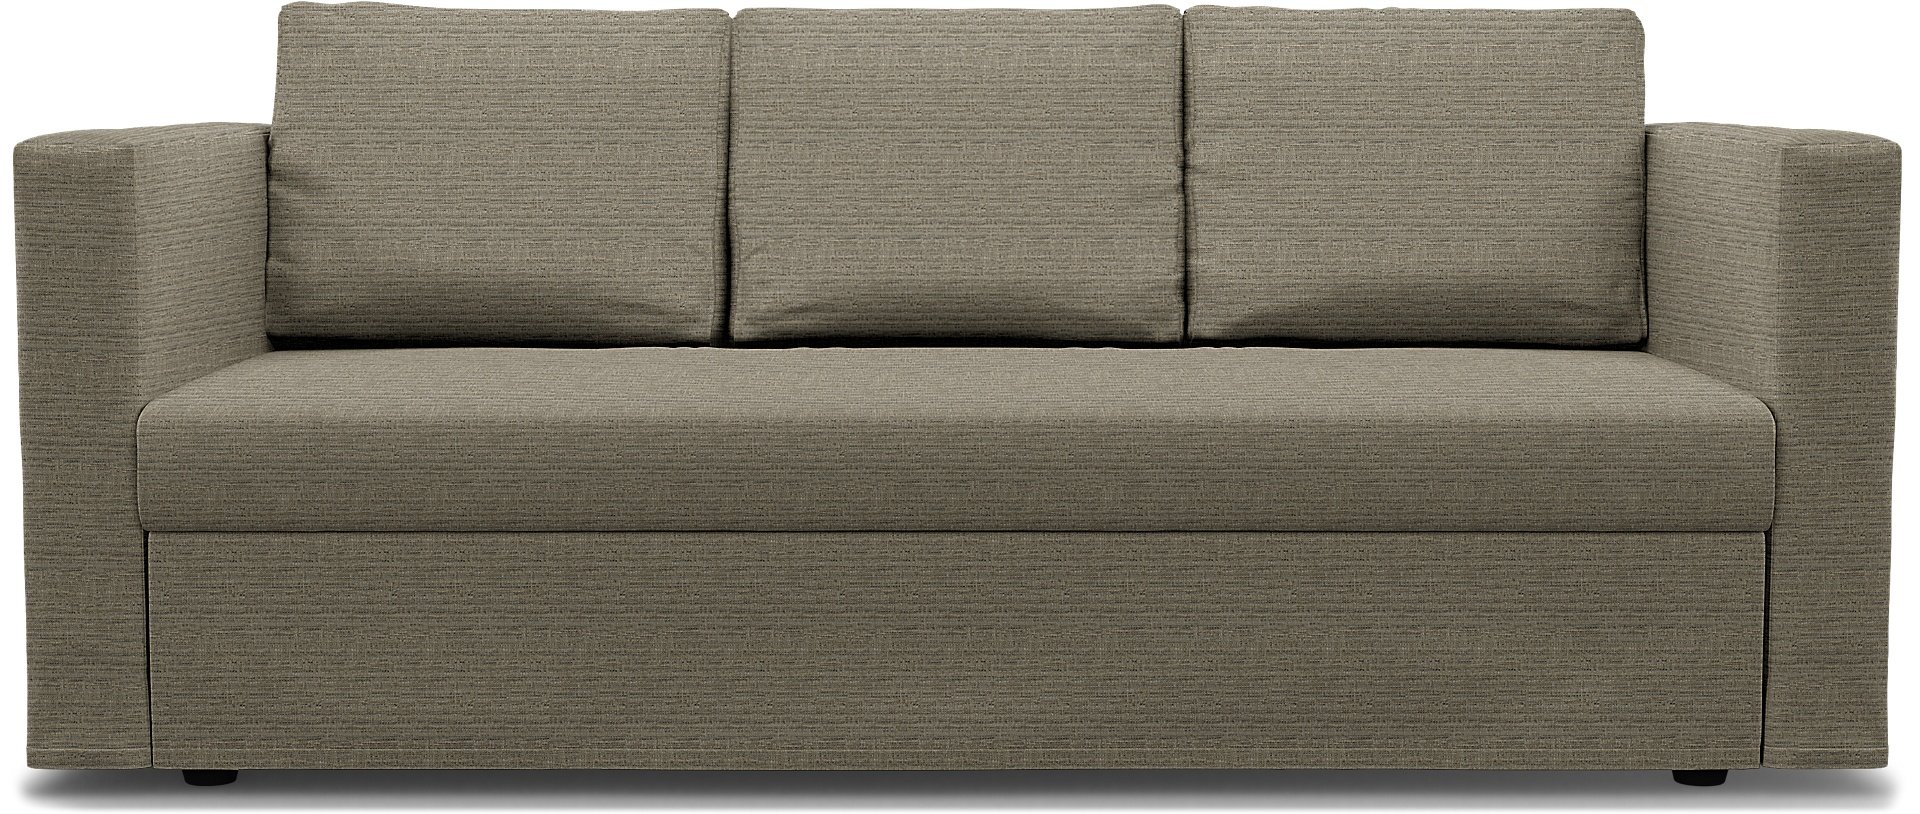 IKEA - Friheten 3 Seater Sofa Bed Cover, Mole Brown, Boucle & Texture - Bemz